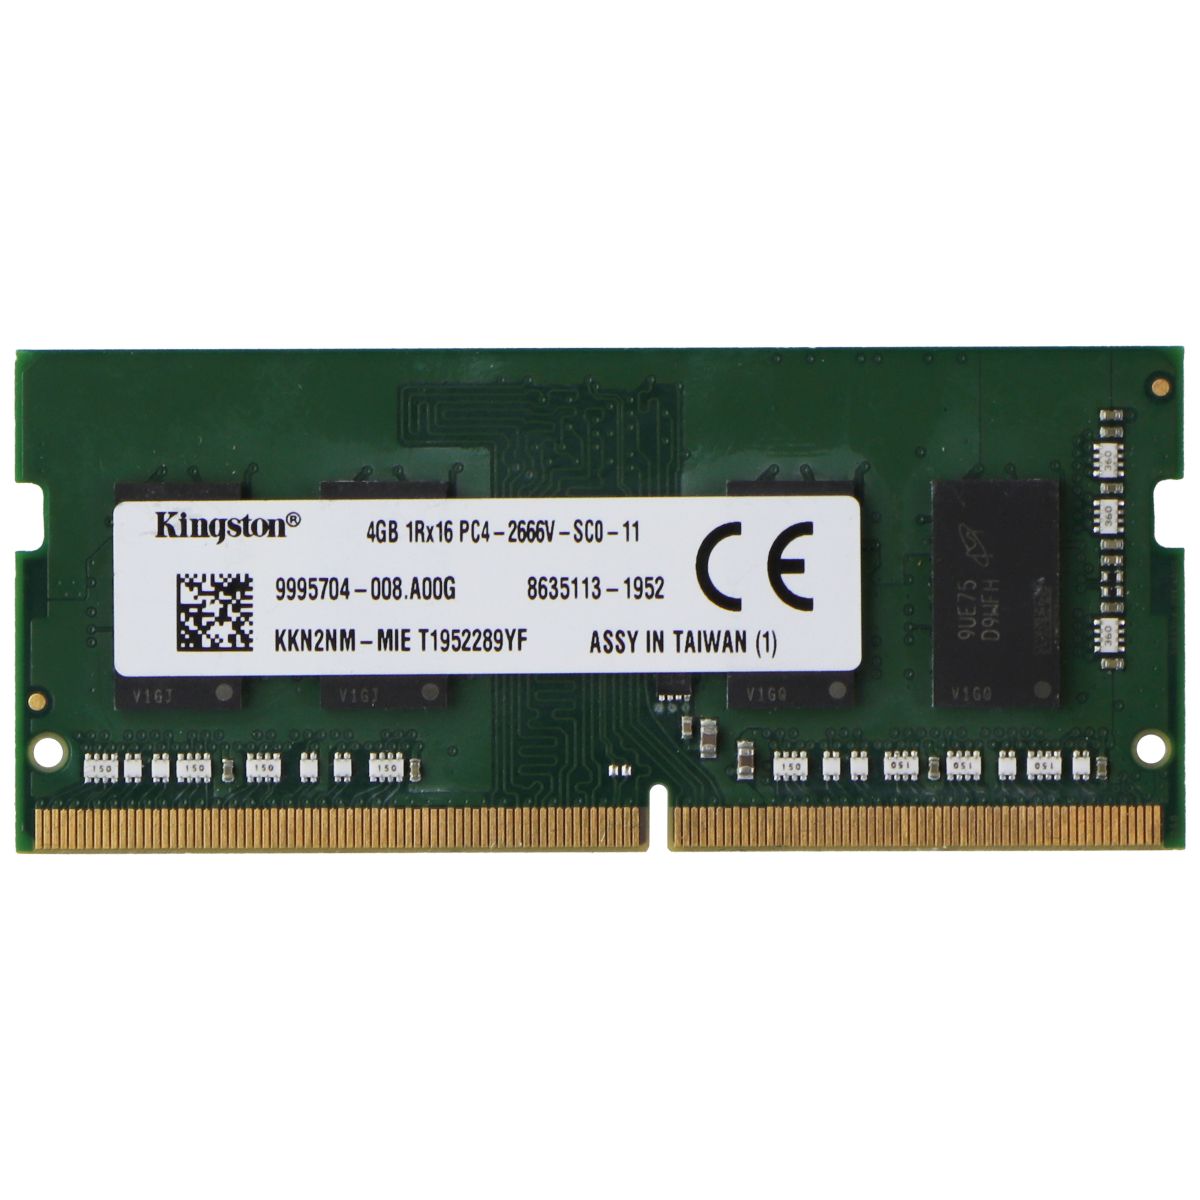 Kingston (4GB) DDR4 RAM PC4-2666V (1Rx16) SO-DIMM 2666MHz (KKN2NM-MIE)